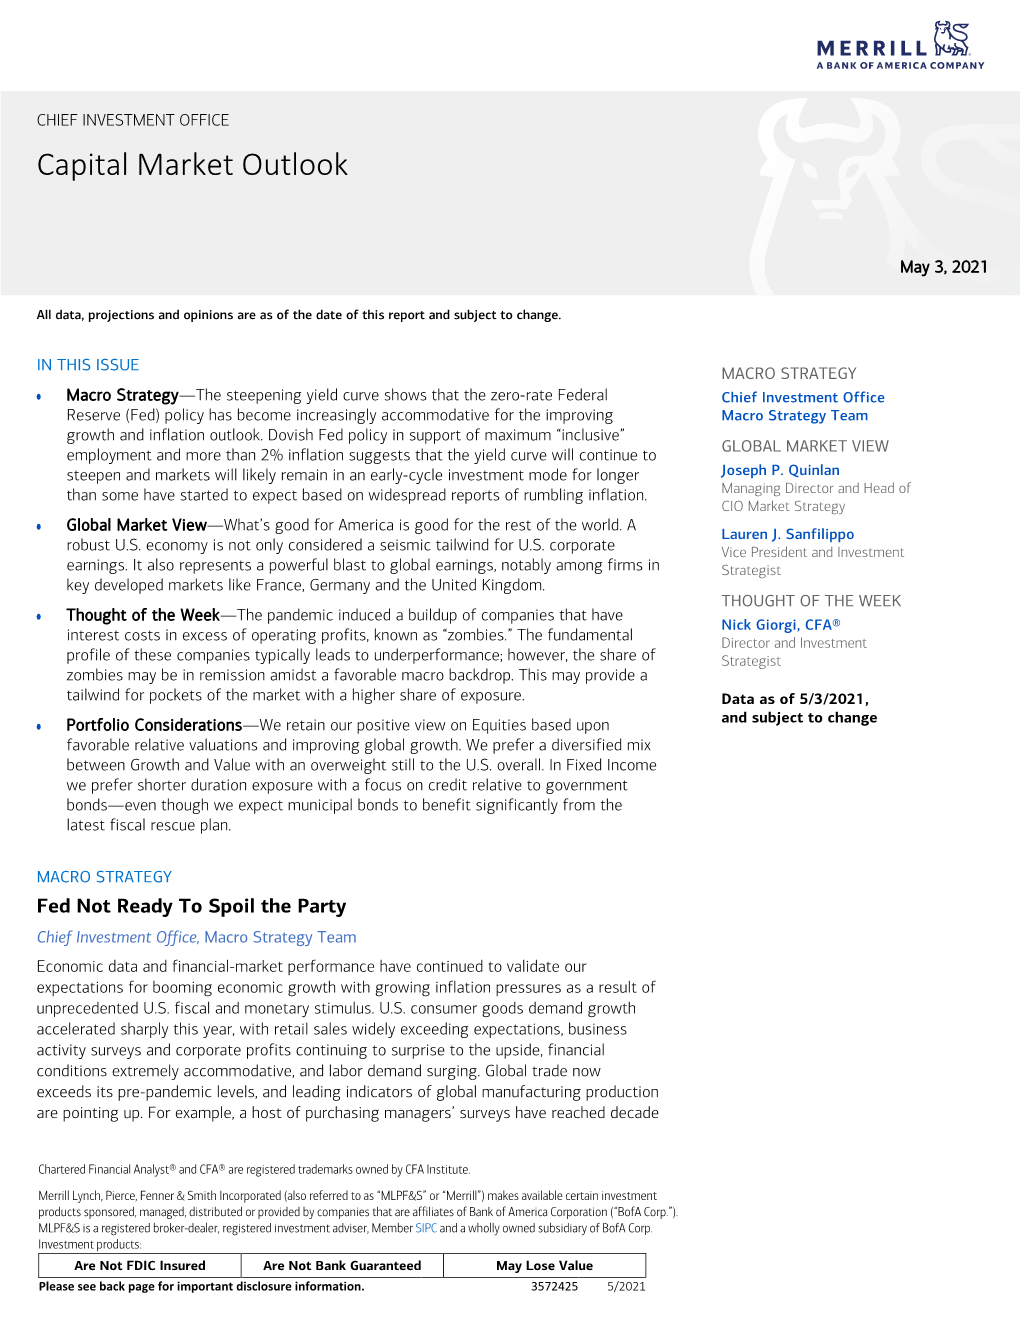 Capital Market Outlook, Merrill, May 3, 2021